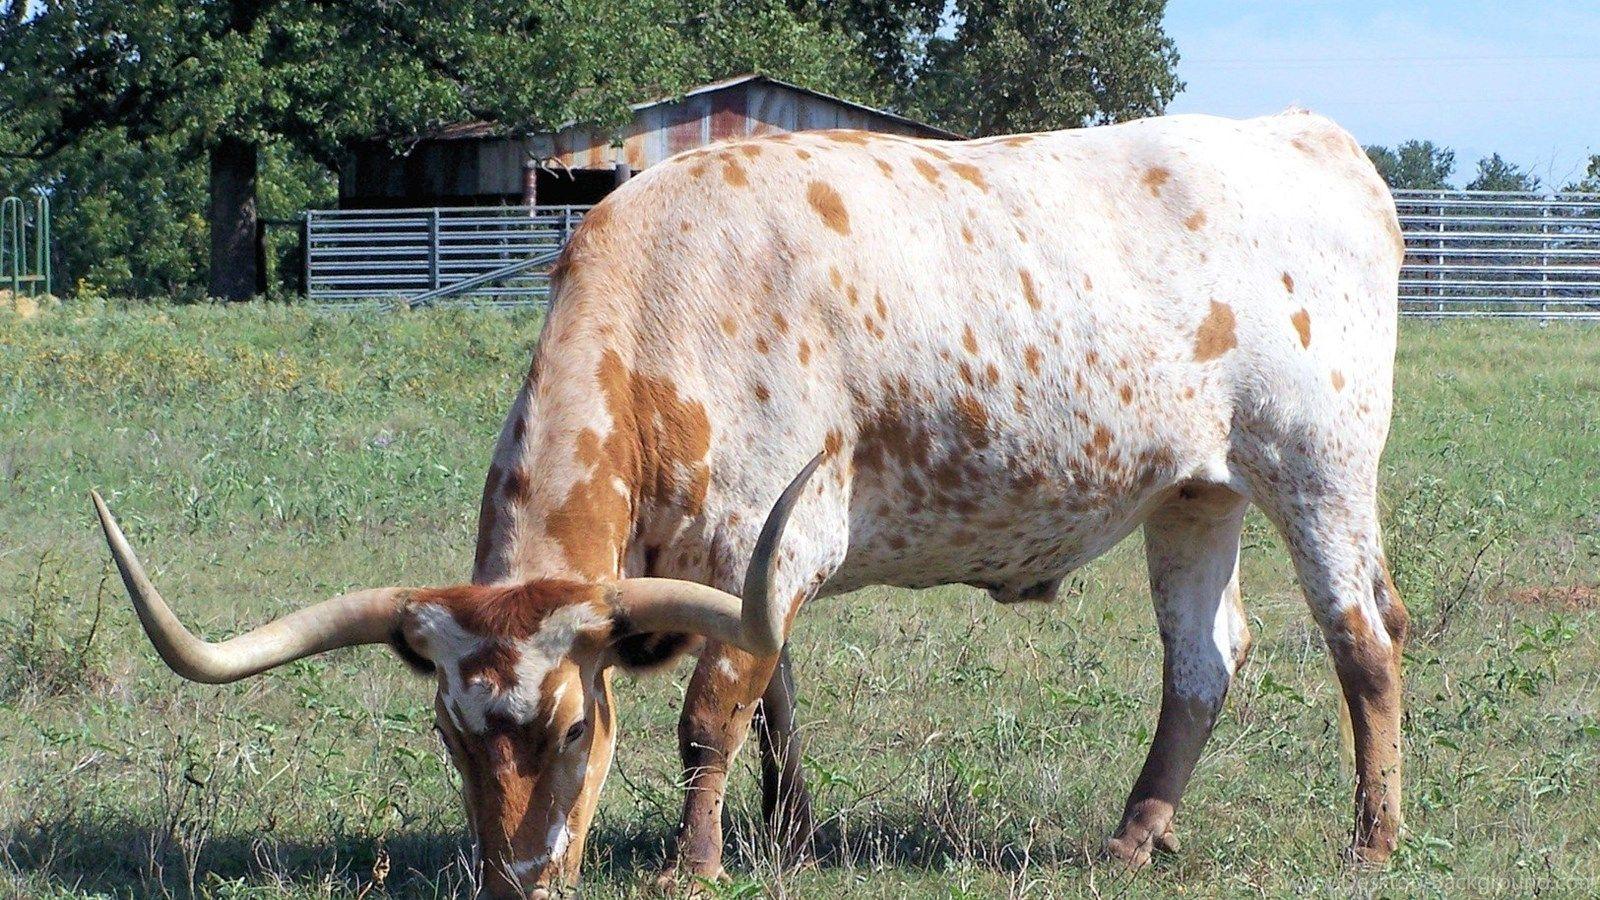 Cows Texas Longhorn Cattle Bevo Desktop Background Image Cows